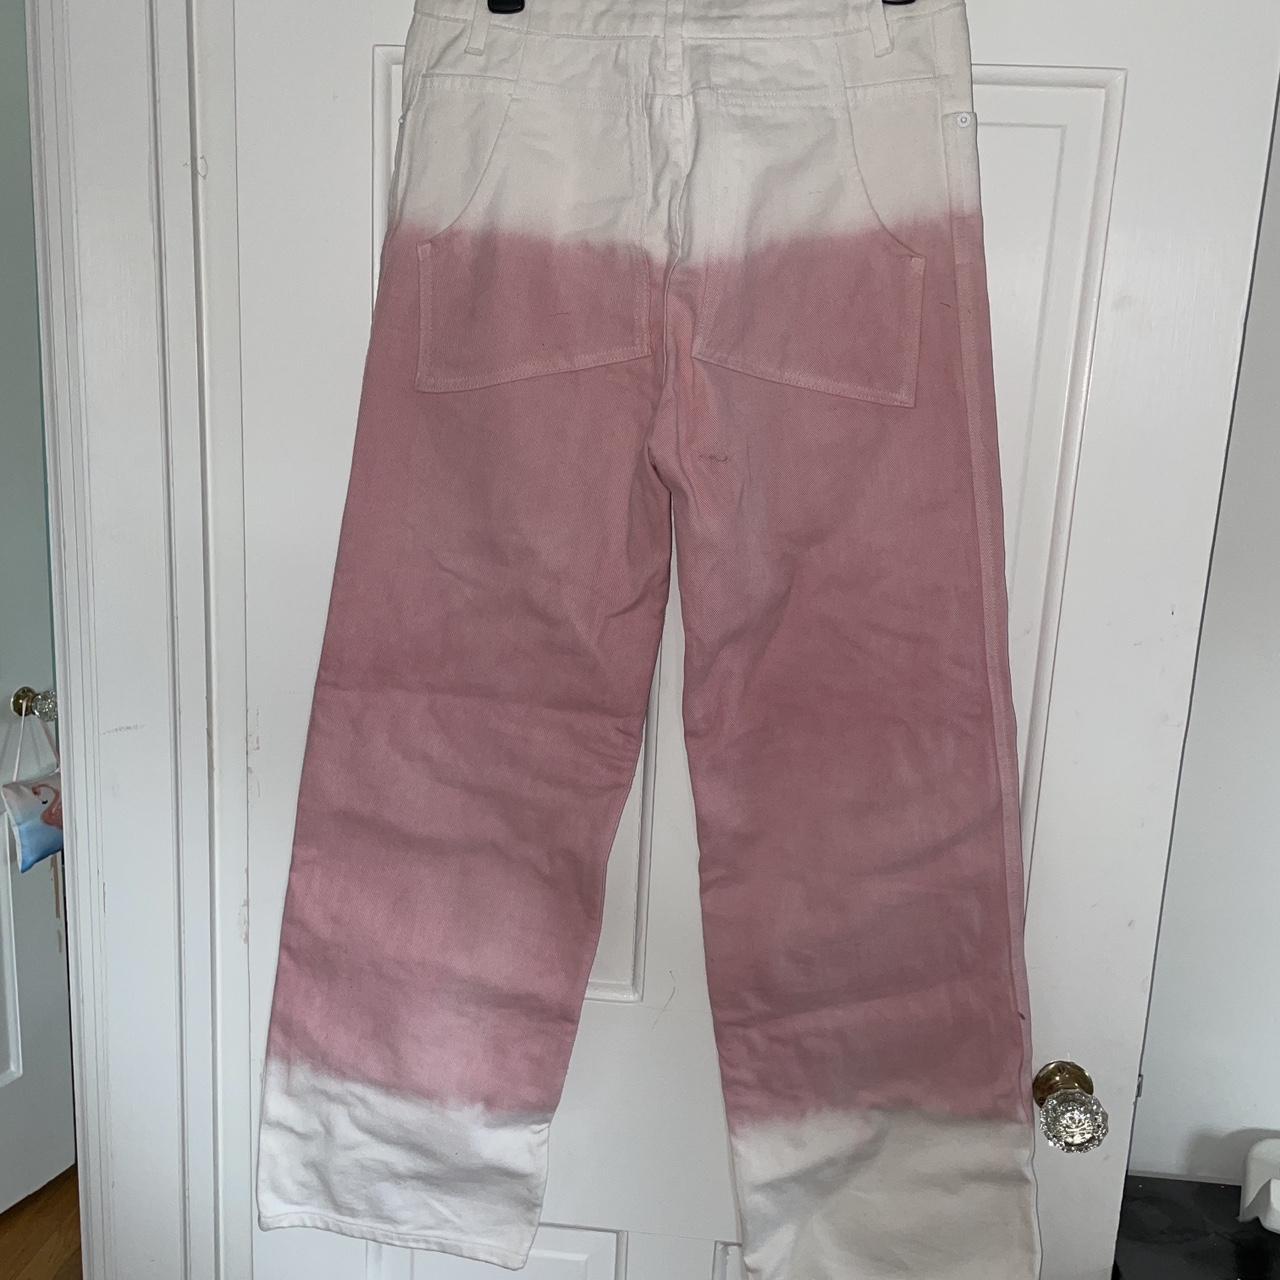 Eckhaus Latta Men's White and Pink Jeans (2)